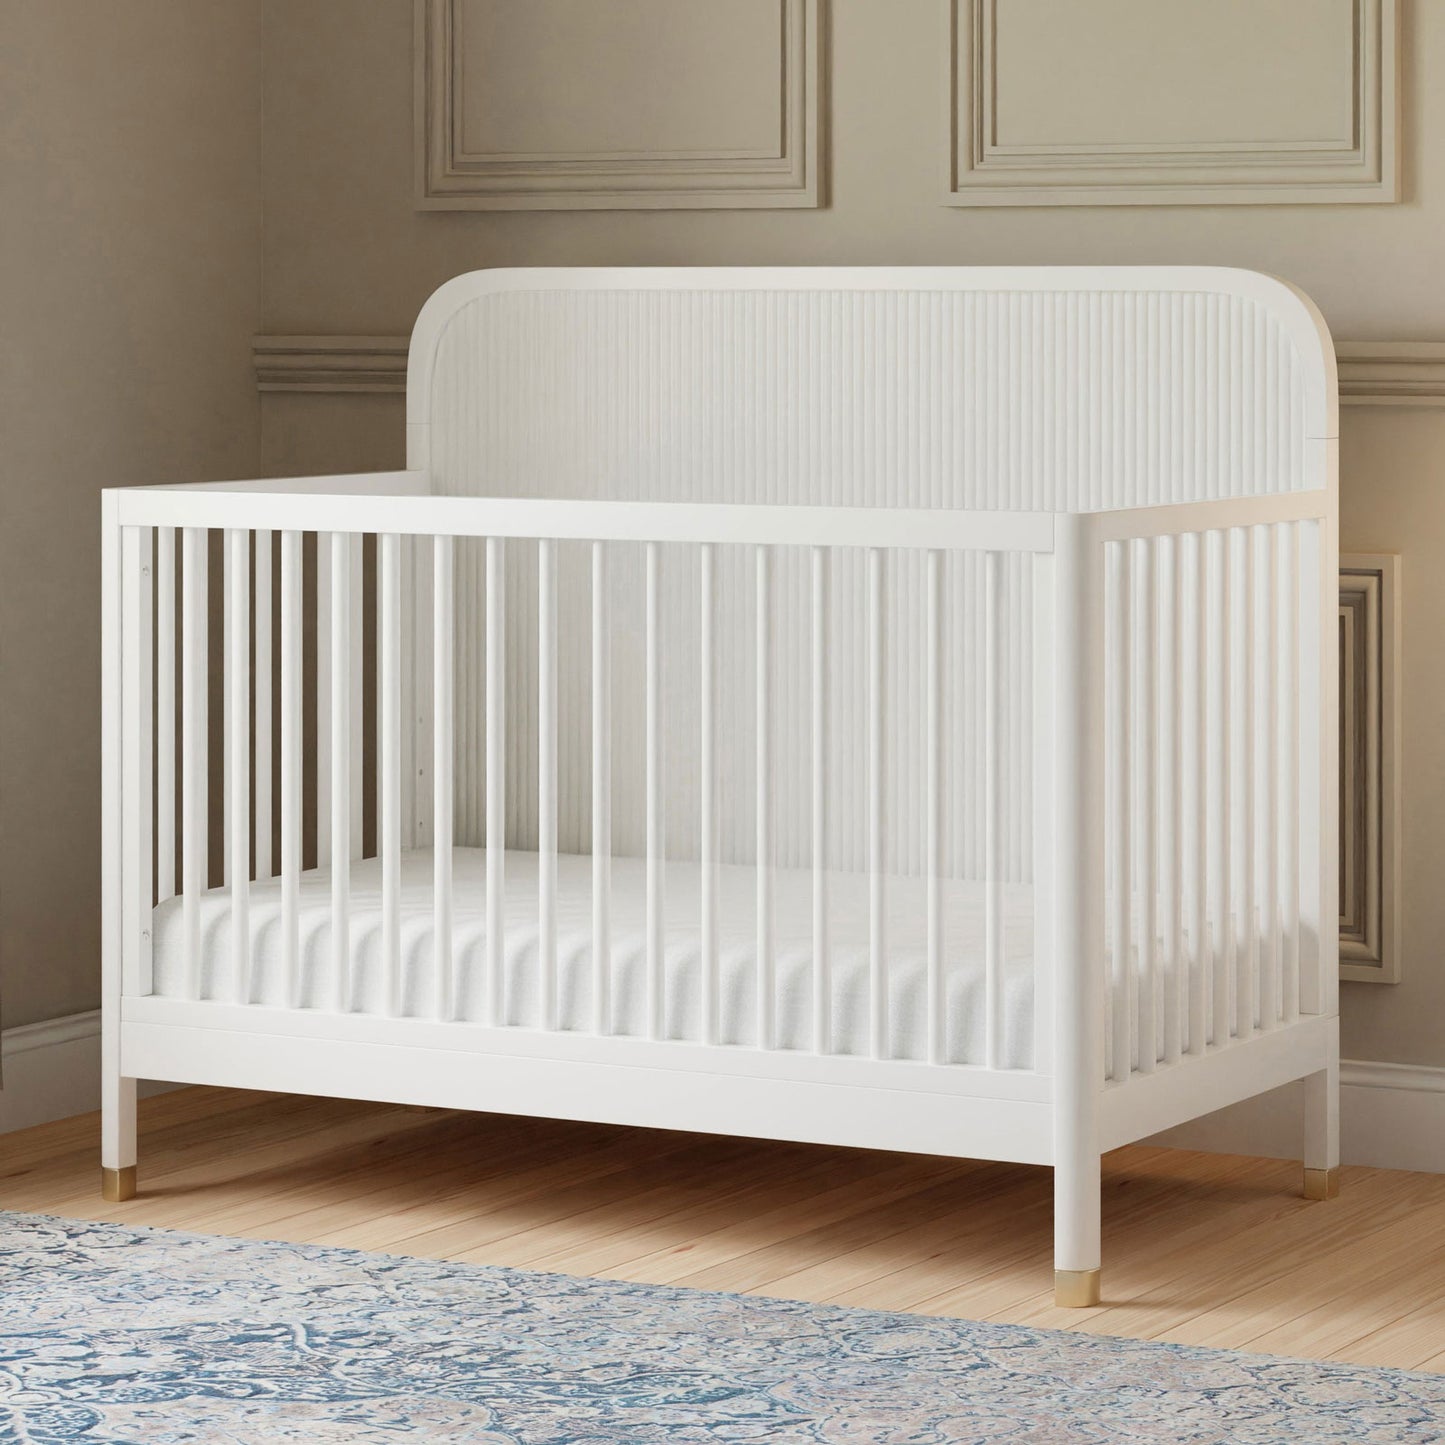 Namesake Brimsley Tambour 4-in-1 Convertible Crib - Warm White in nursery